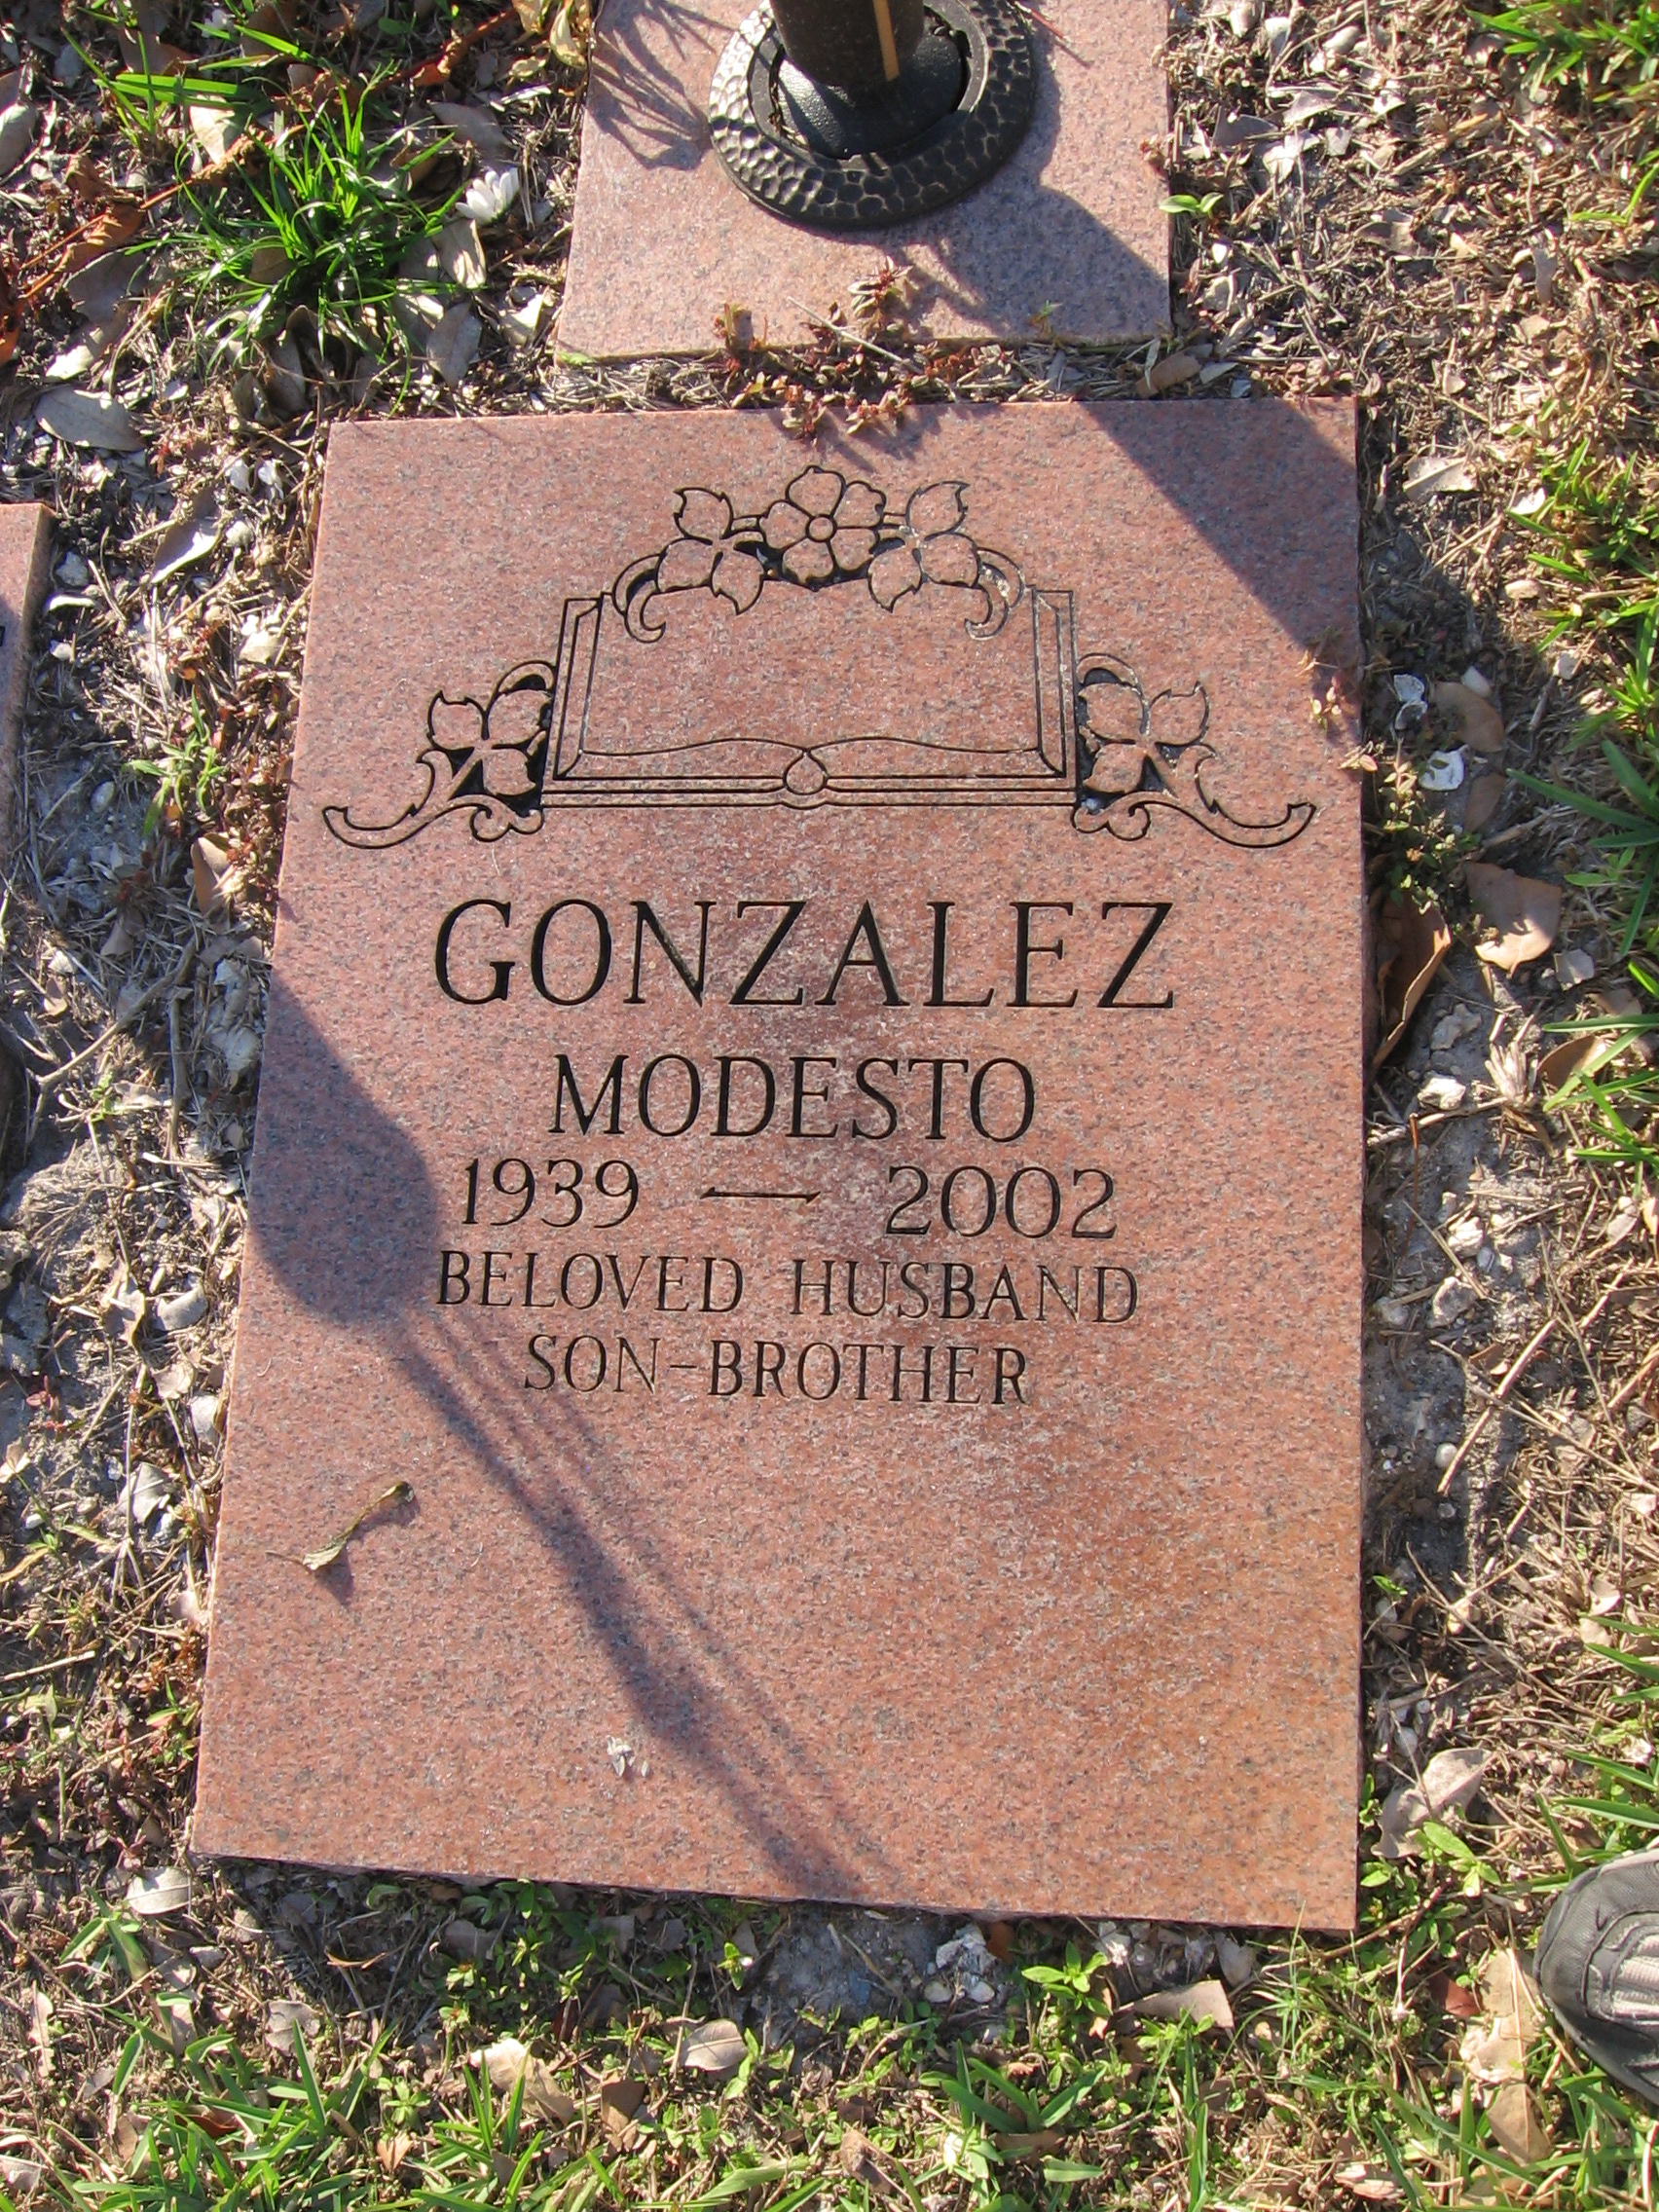 Modesto Gonzalez